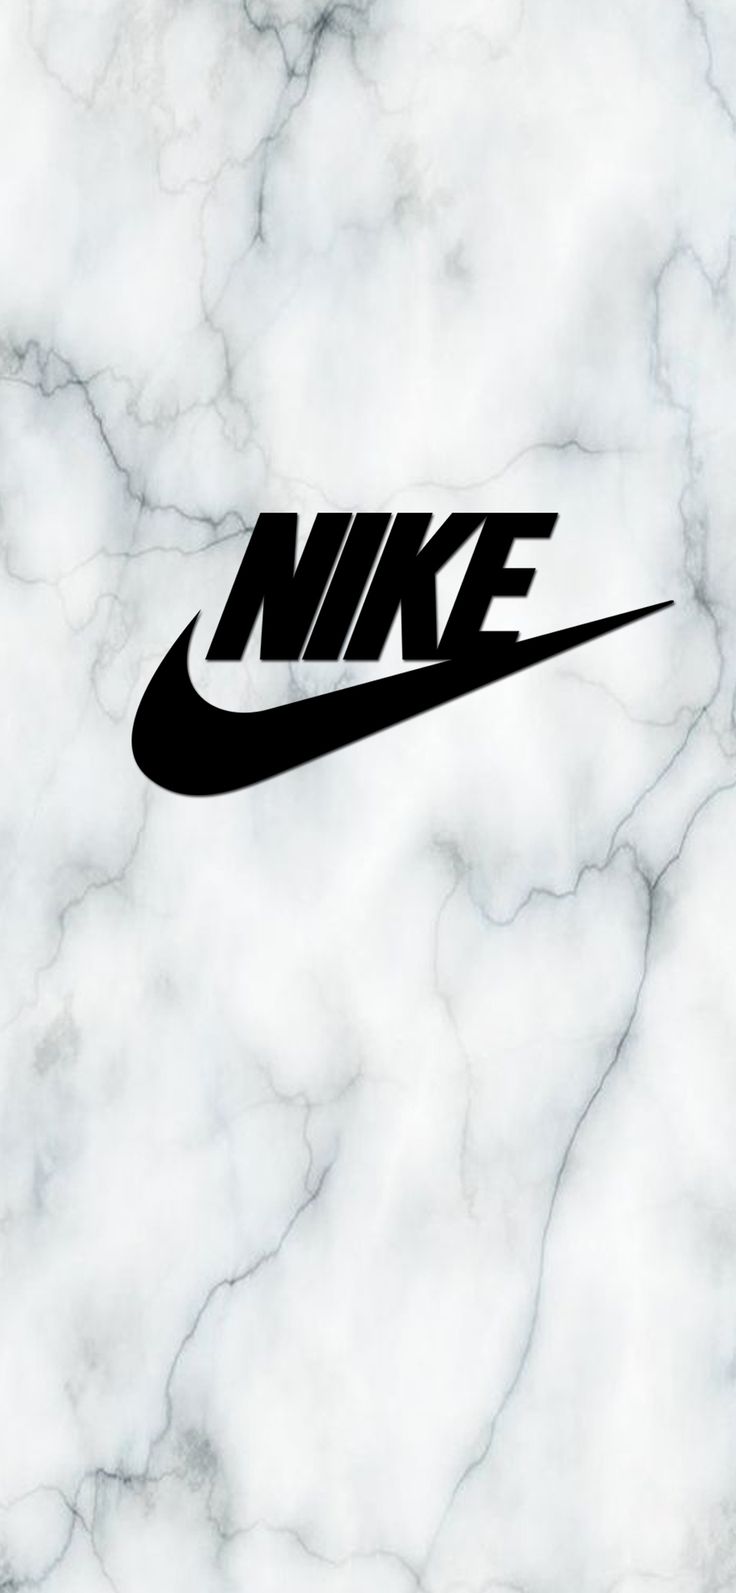 The nike logo on a marble background - Nike